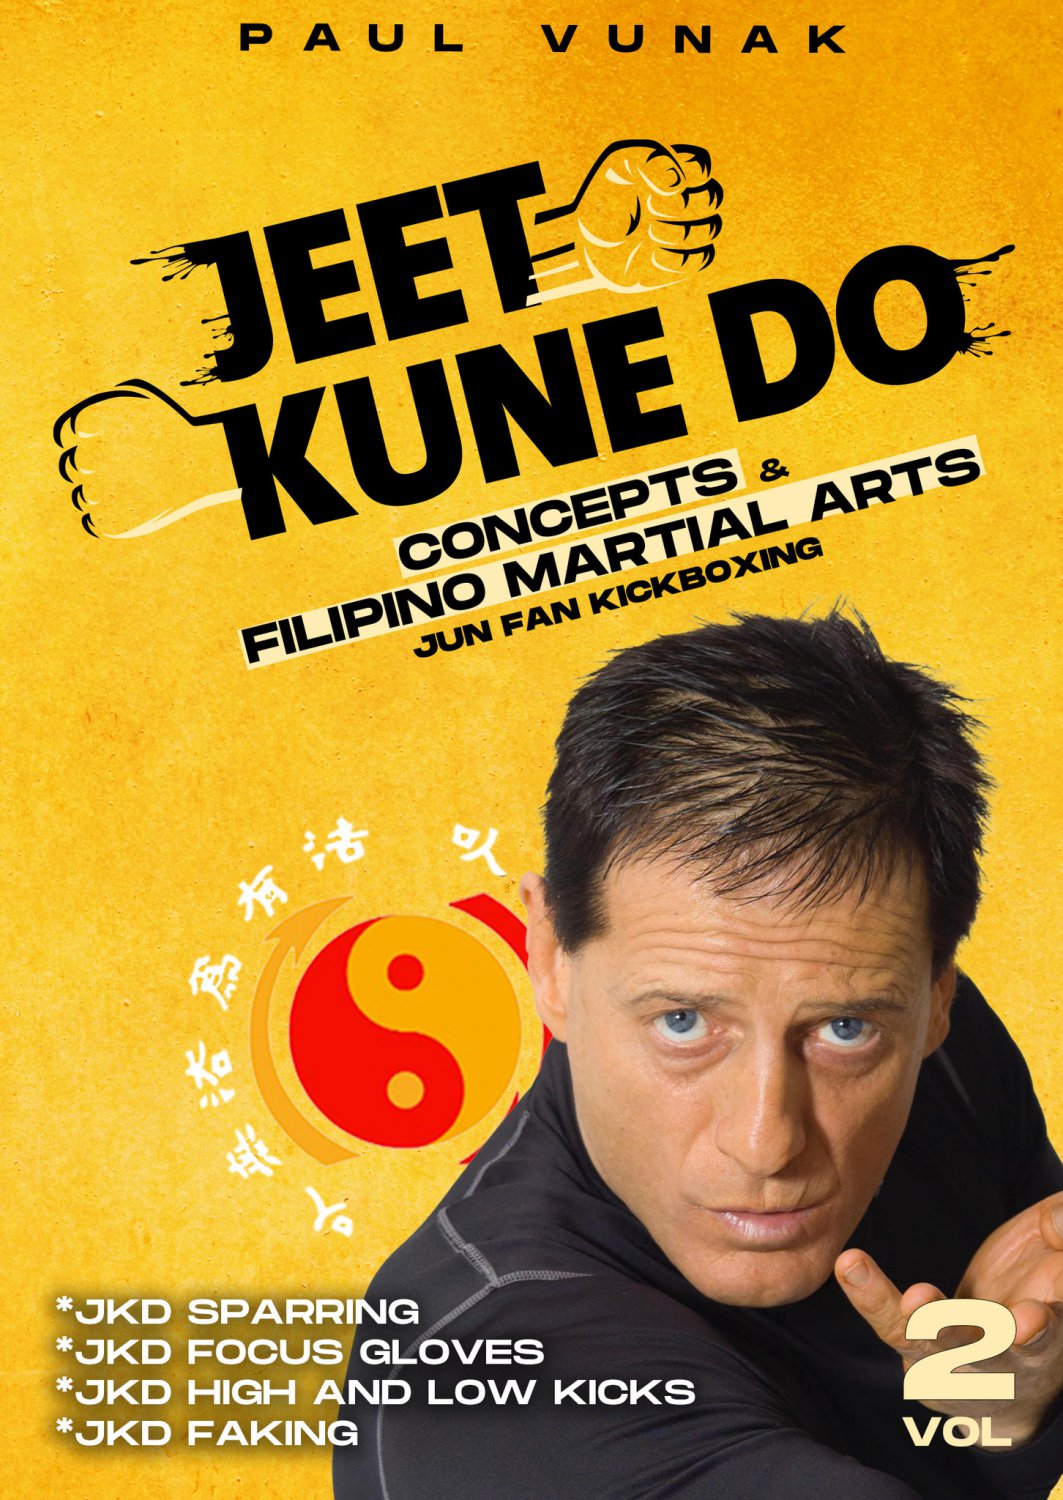 VD9612A-VD DIGITAL VIDEO Jeet Kune Do Concepts Filipino Martial Arts Jun Fan Kickboxing #2 - Vunak